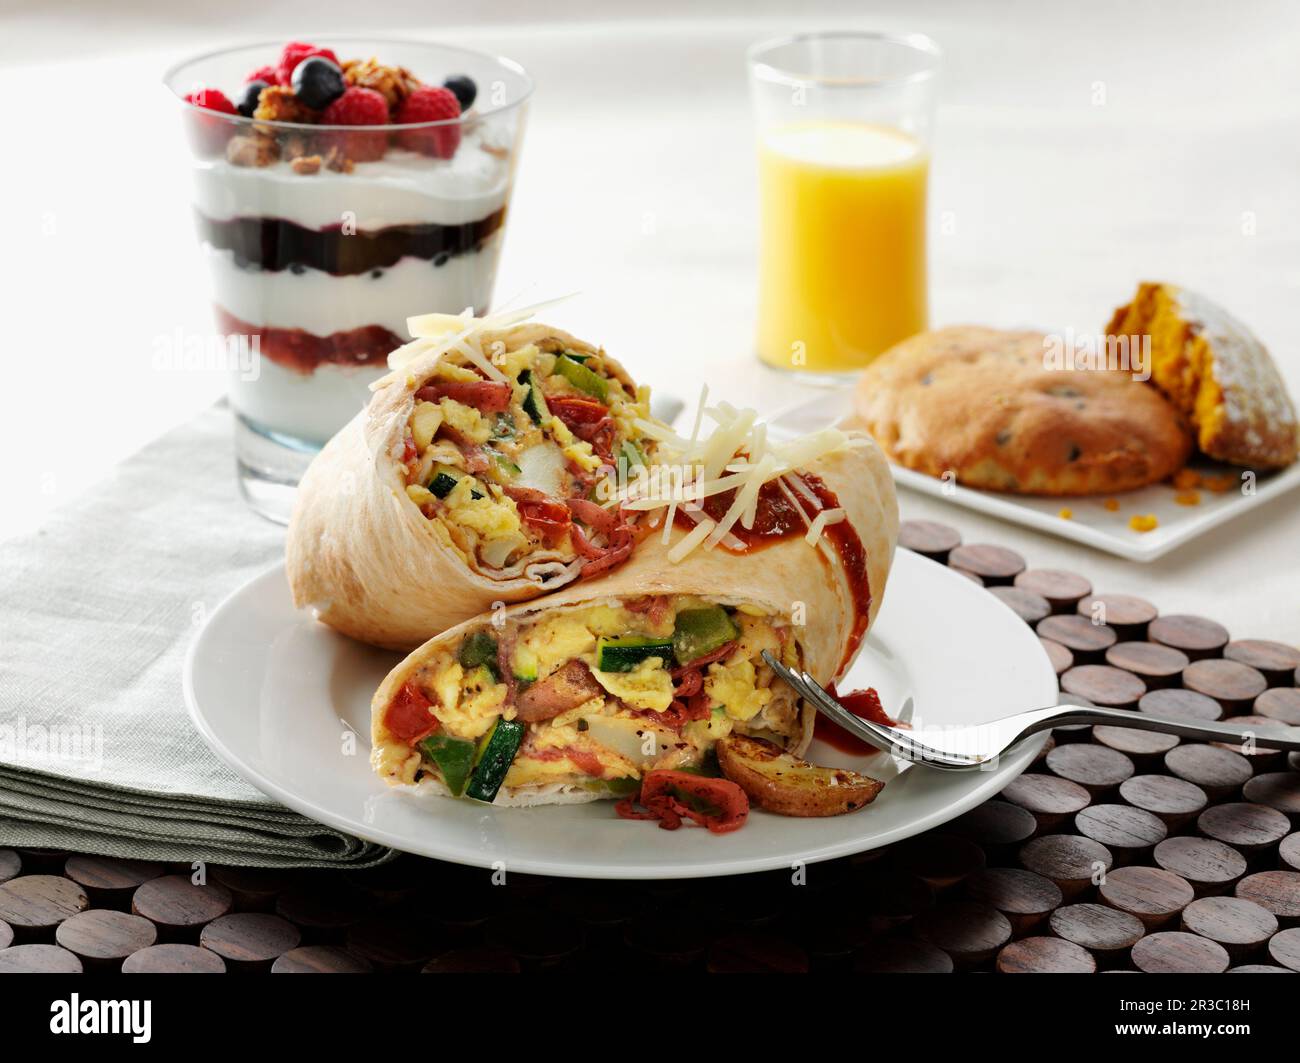 Egg and vegetable breakfast wrap sandwich with yogurt and fruit parfait with orange juice Stock Photo